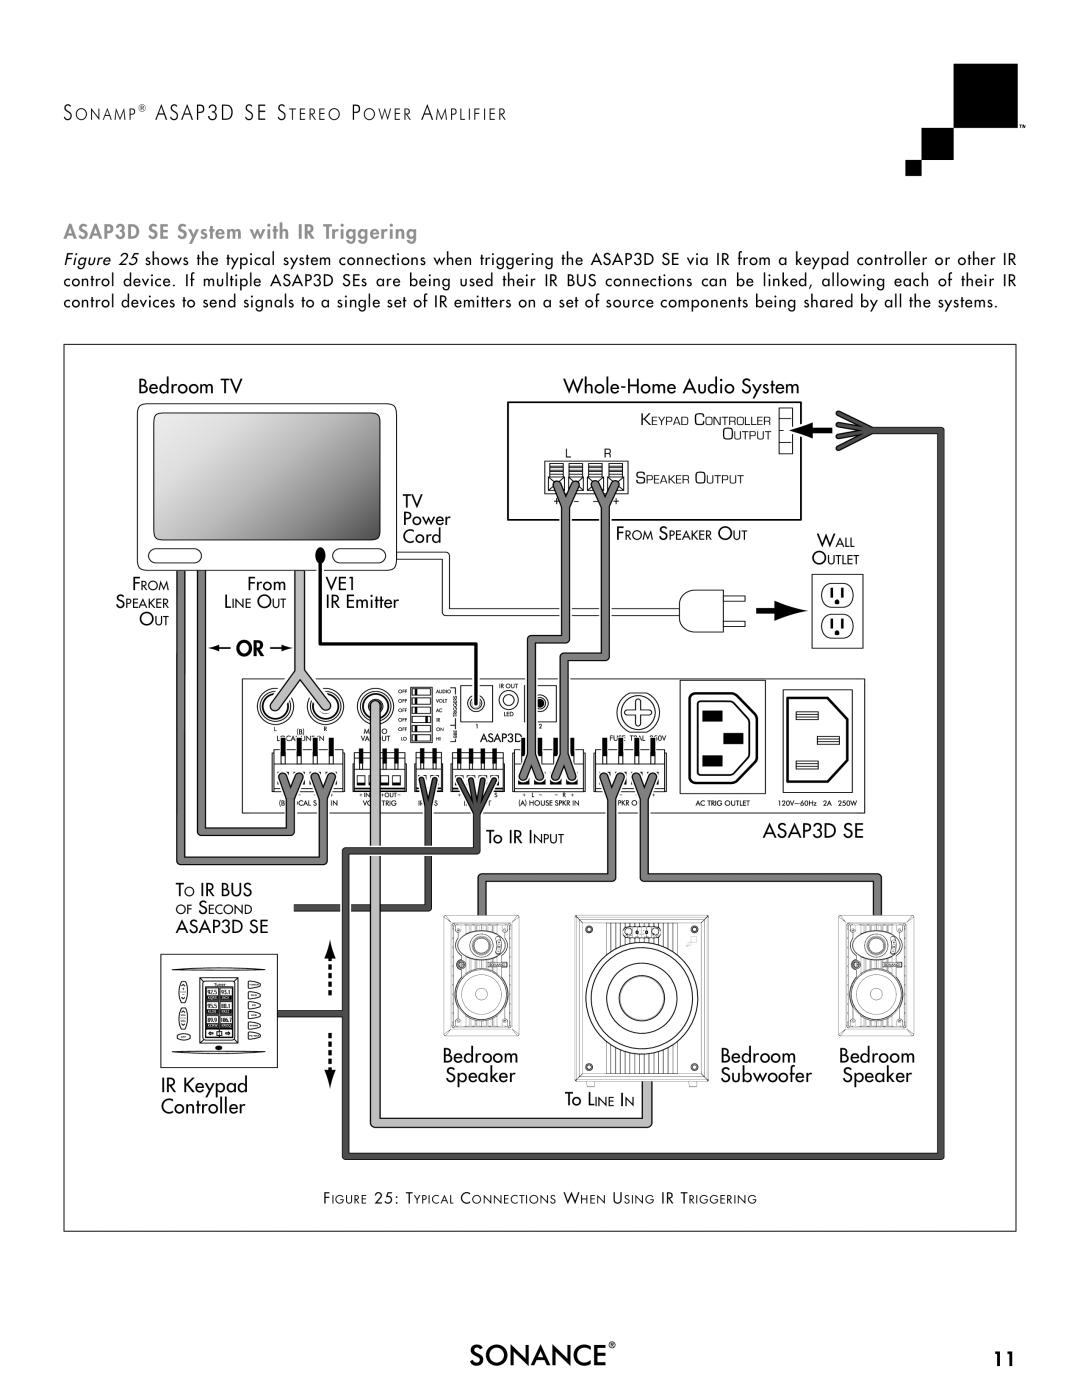 Sonance Sonamp ASAP3D SE Stereo Power Amplifier ASAP3D SE System with IR Triggering, IR Keypad Controller, Bedroom, From 